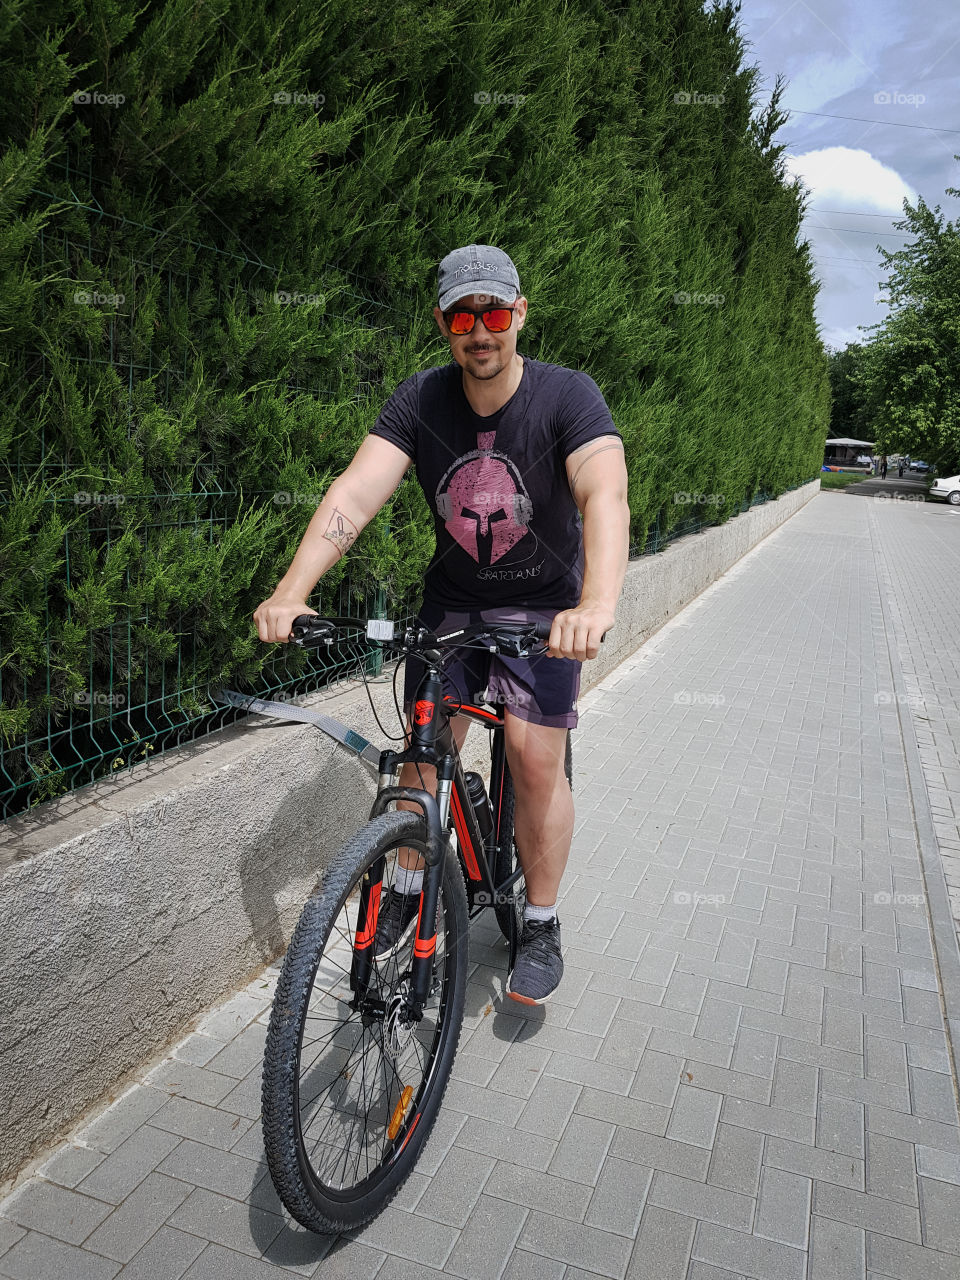 Adult young man on bike.